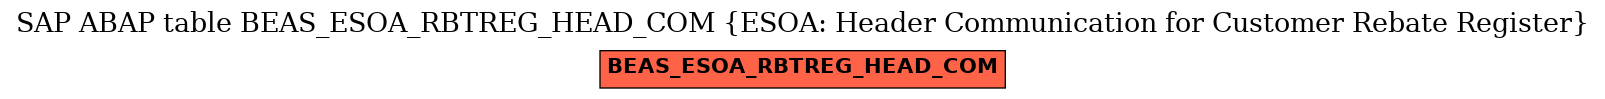 E-R Diagram for table BEAS_ESOA_RBTREG_HEAD_COM (ESOA: Header Communication for Customer Rebate Register)